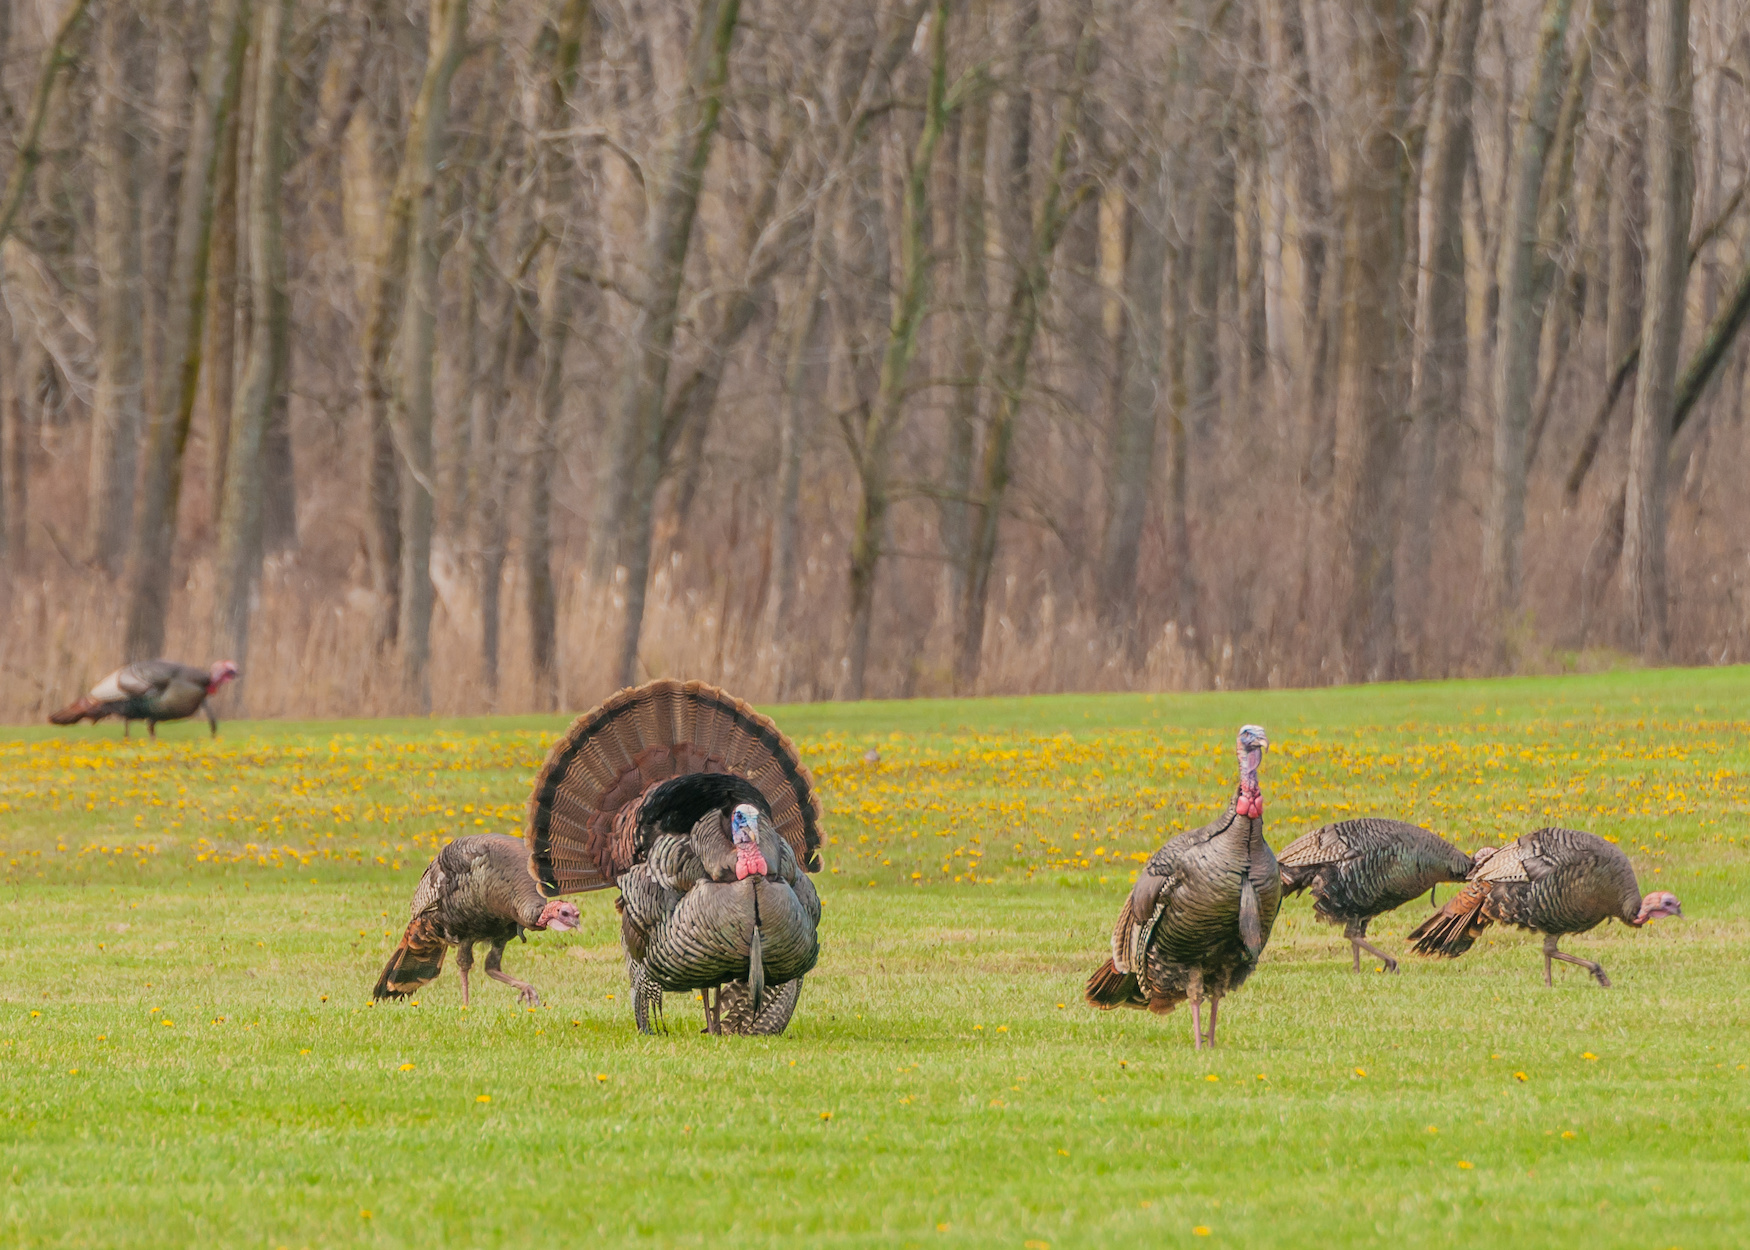 A flock of wild turkeys forages in a field.